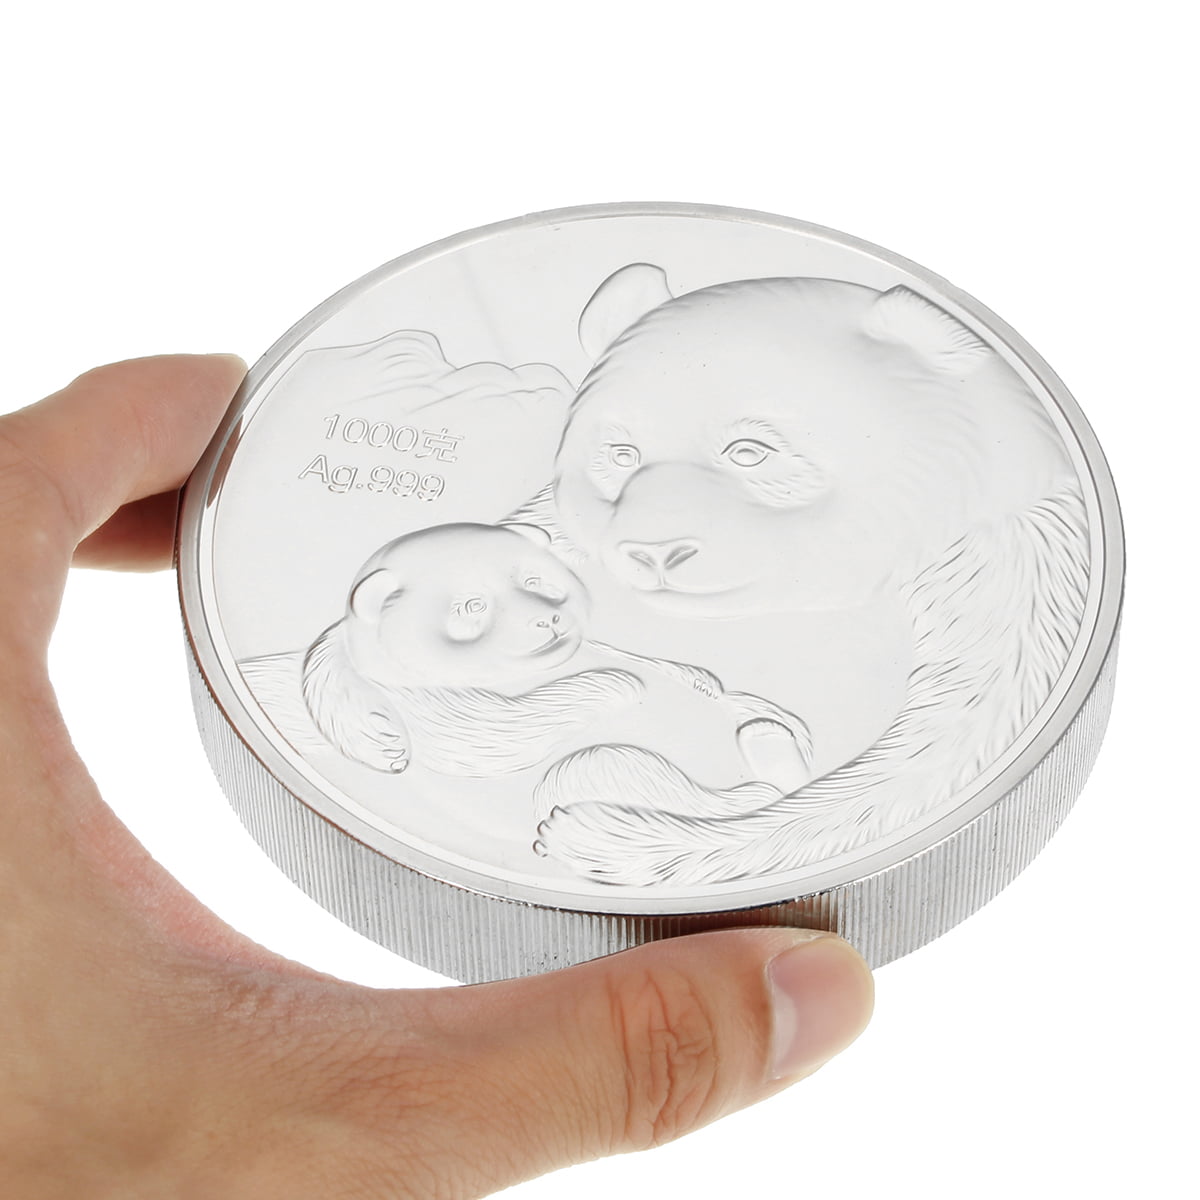 2019 China Panda Commemorative Coin Souvenir Coin New Year Gifts Collection ER 